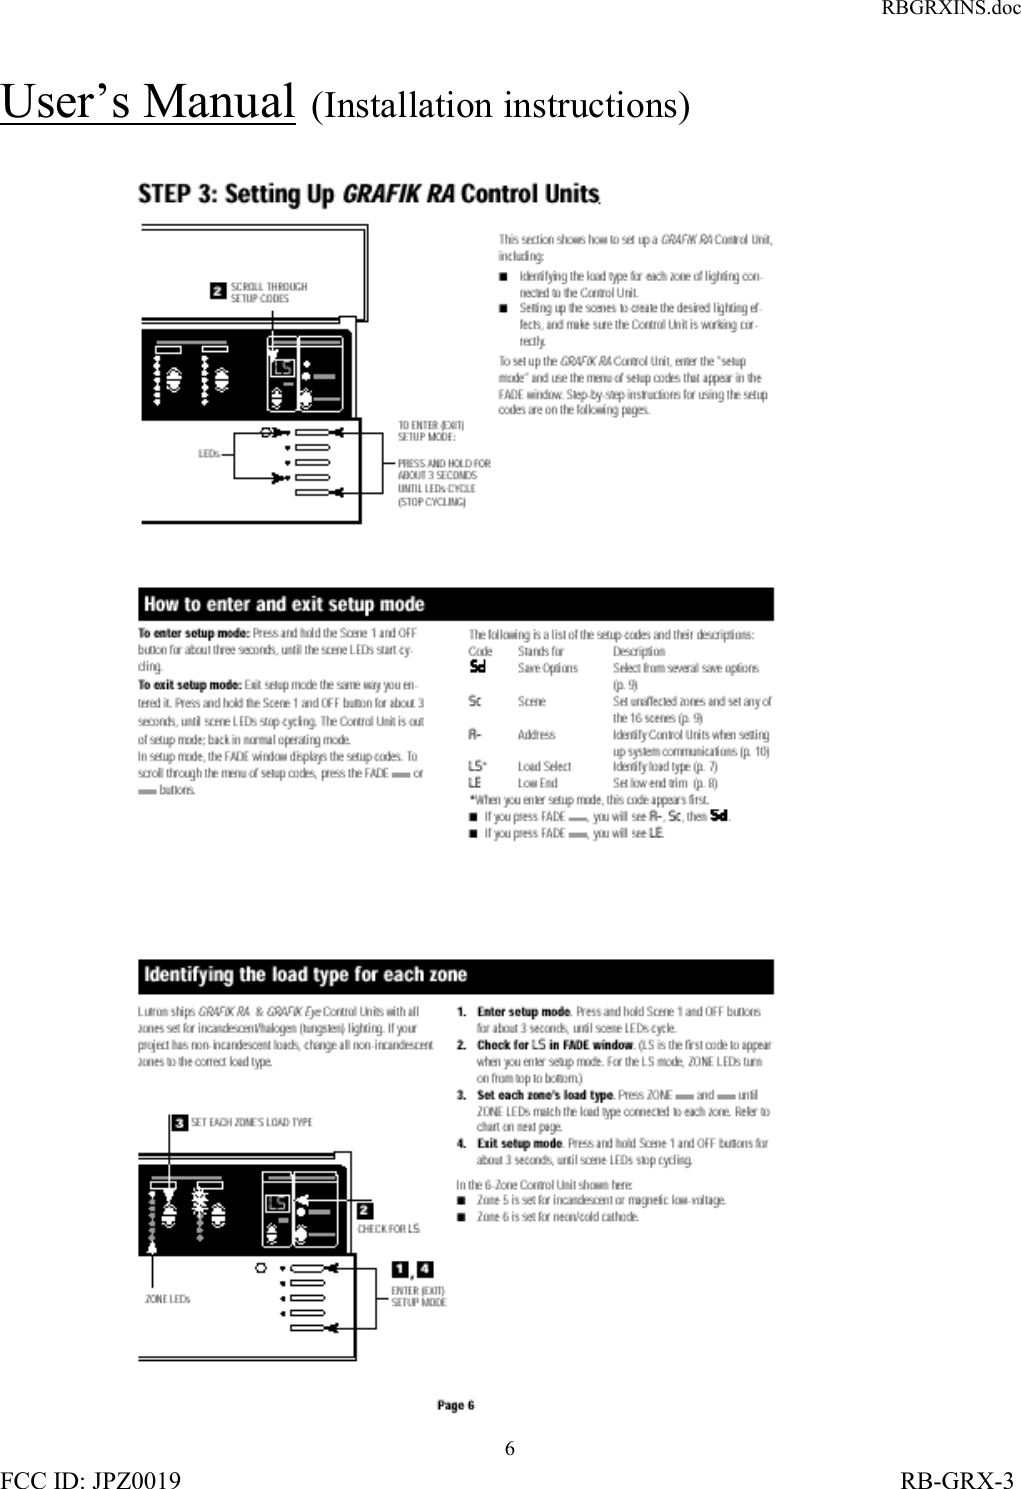 RBGRXINS.docFCC ID: JPZ0019                                                                                                                   RB-GRX-36User’s Manual  (Installation instructions)